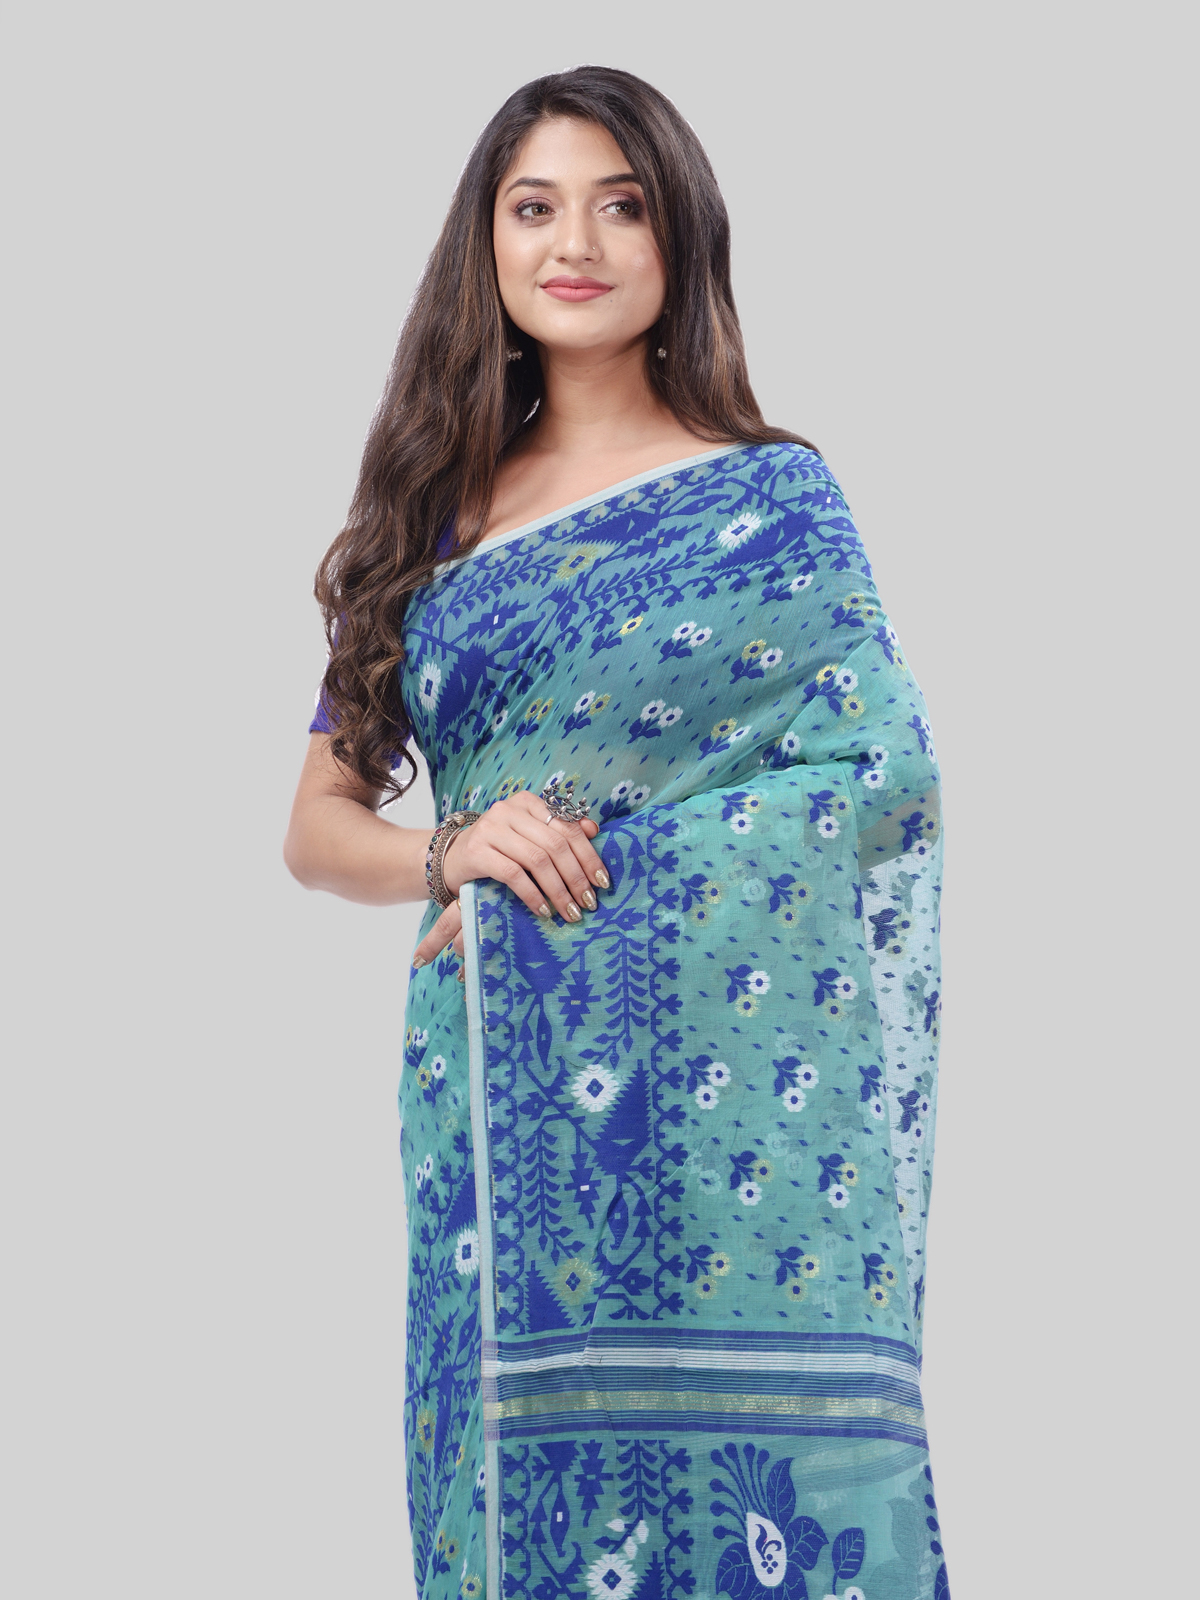 DESH BIDESH Women`s Phulkari Resham Dhakai jamdani Bengal Pure Cotton Handloom Saree Whole Body Design without Blouse Piece (Firoza Blue)